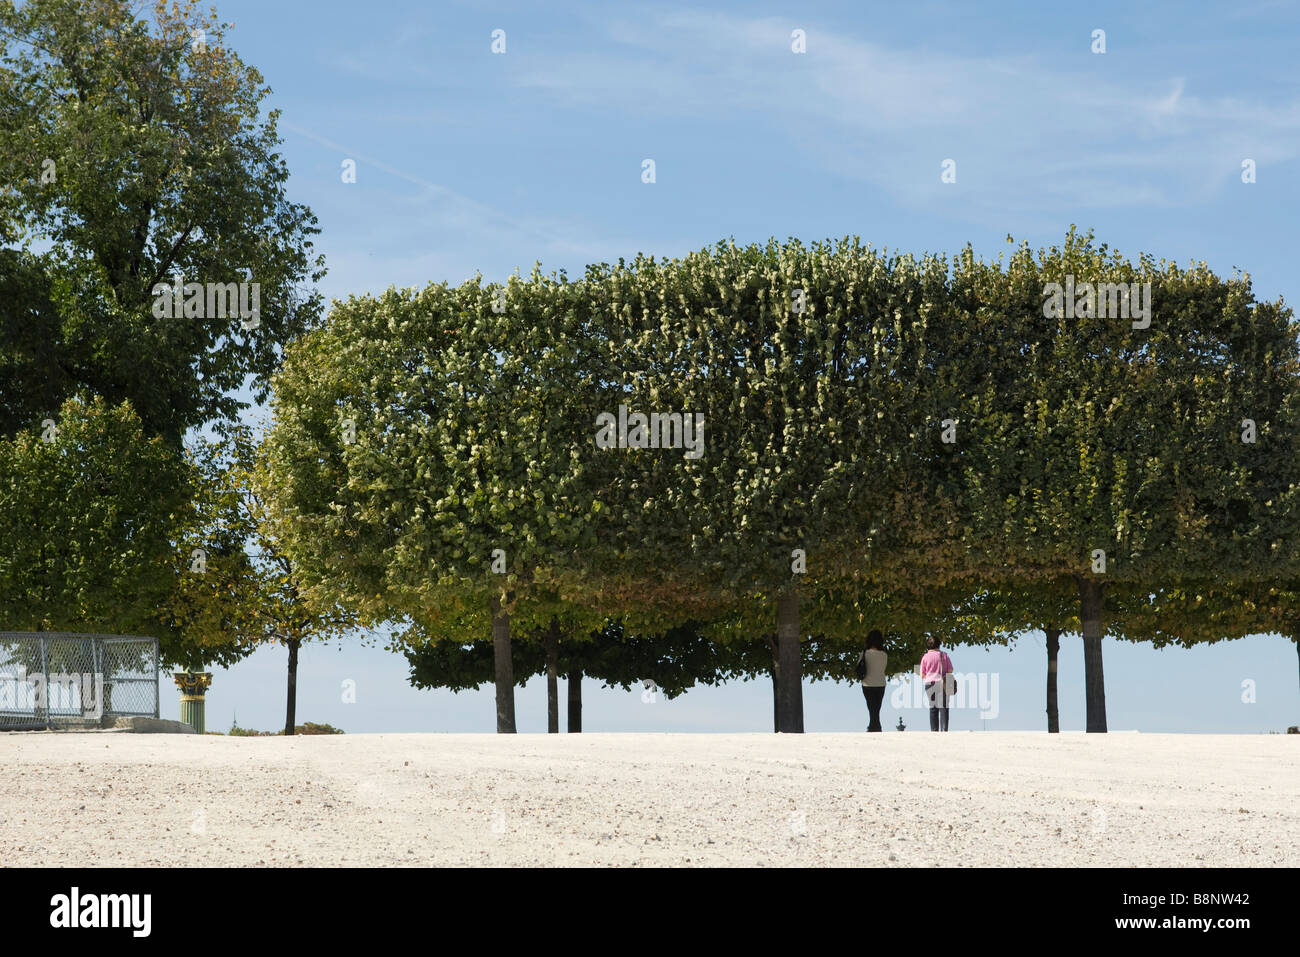 France, Paris, people walking under trees in park Stock Photo